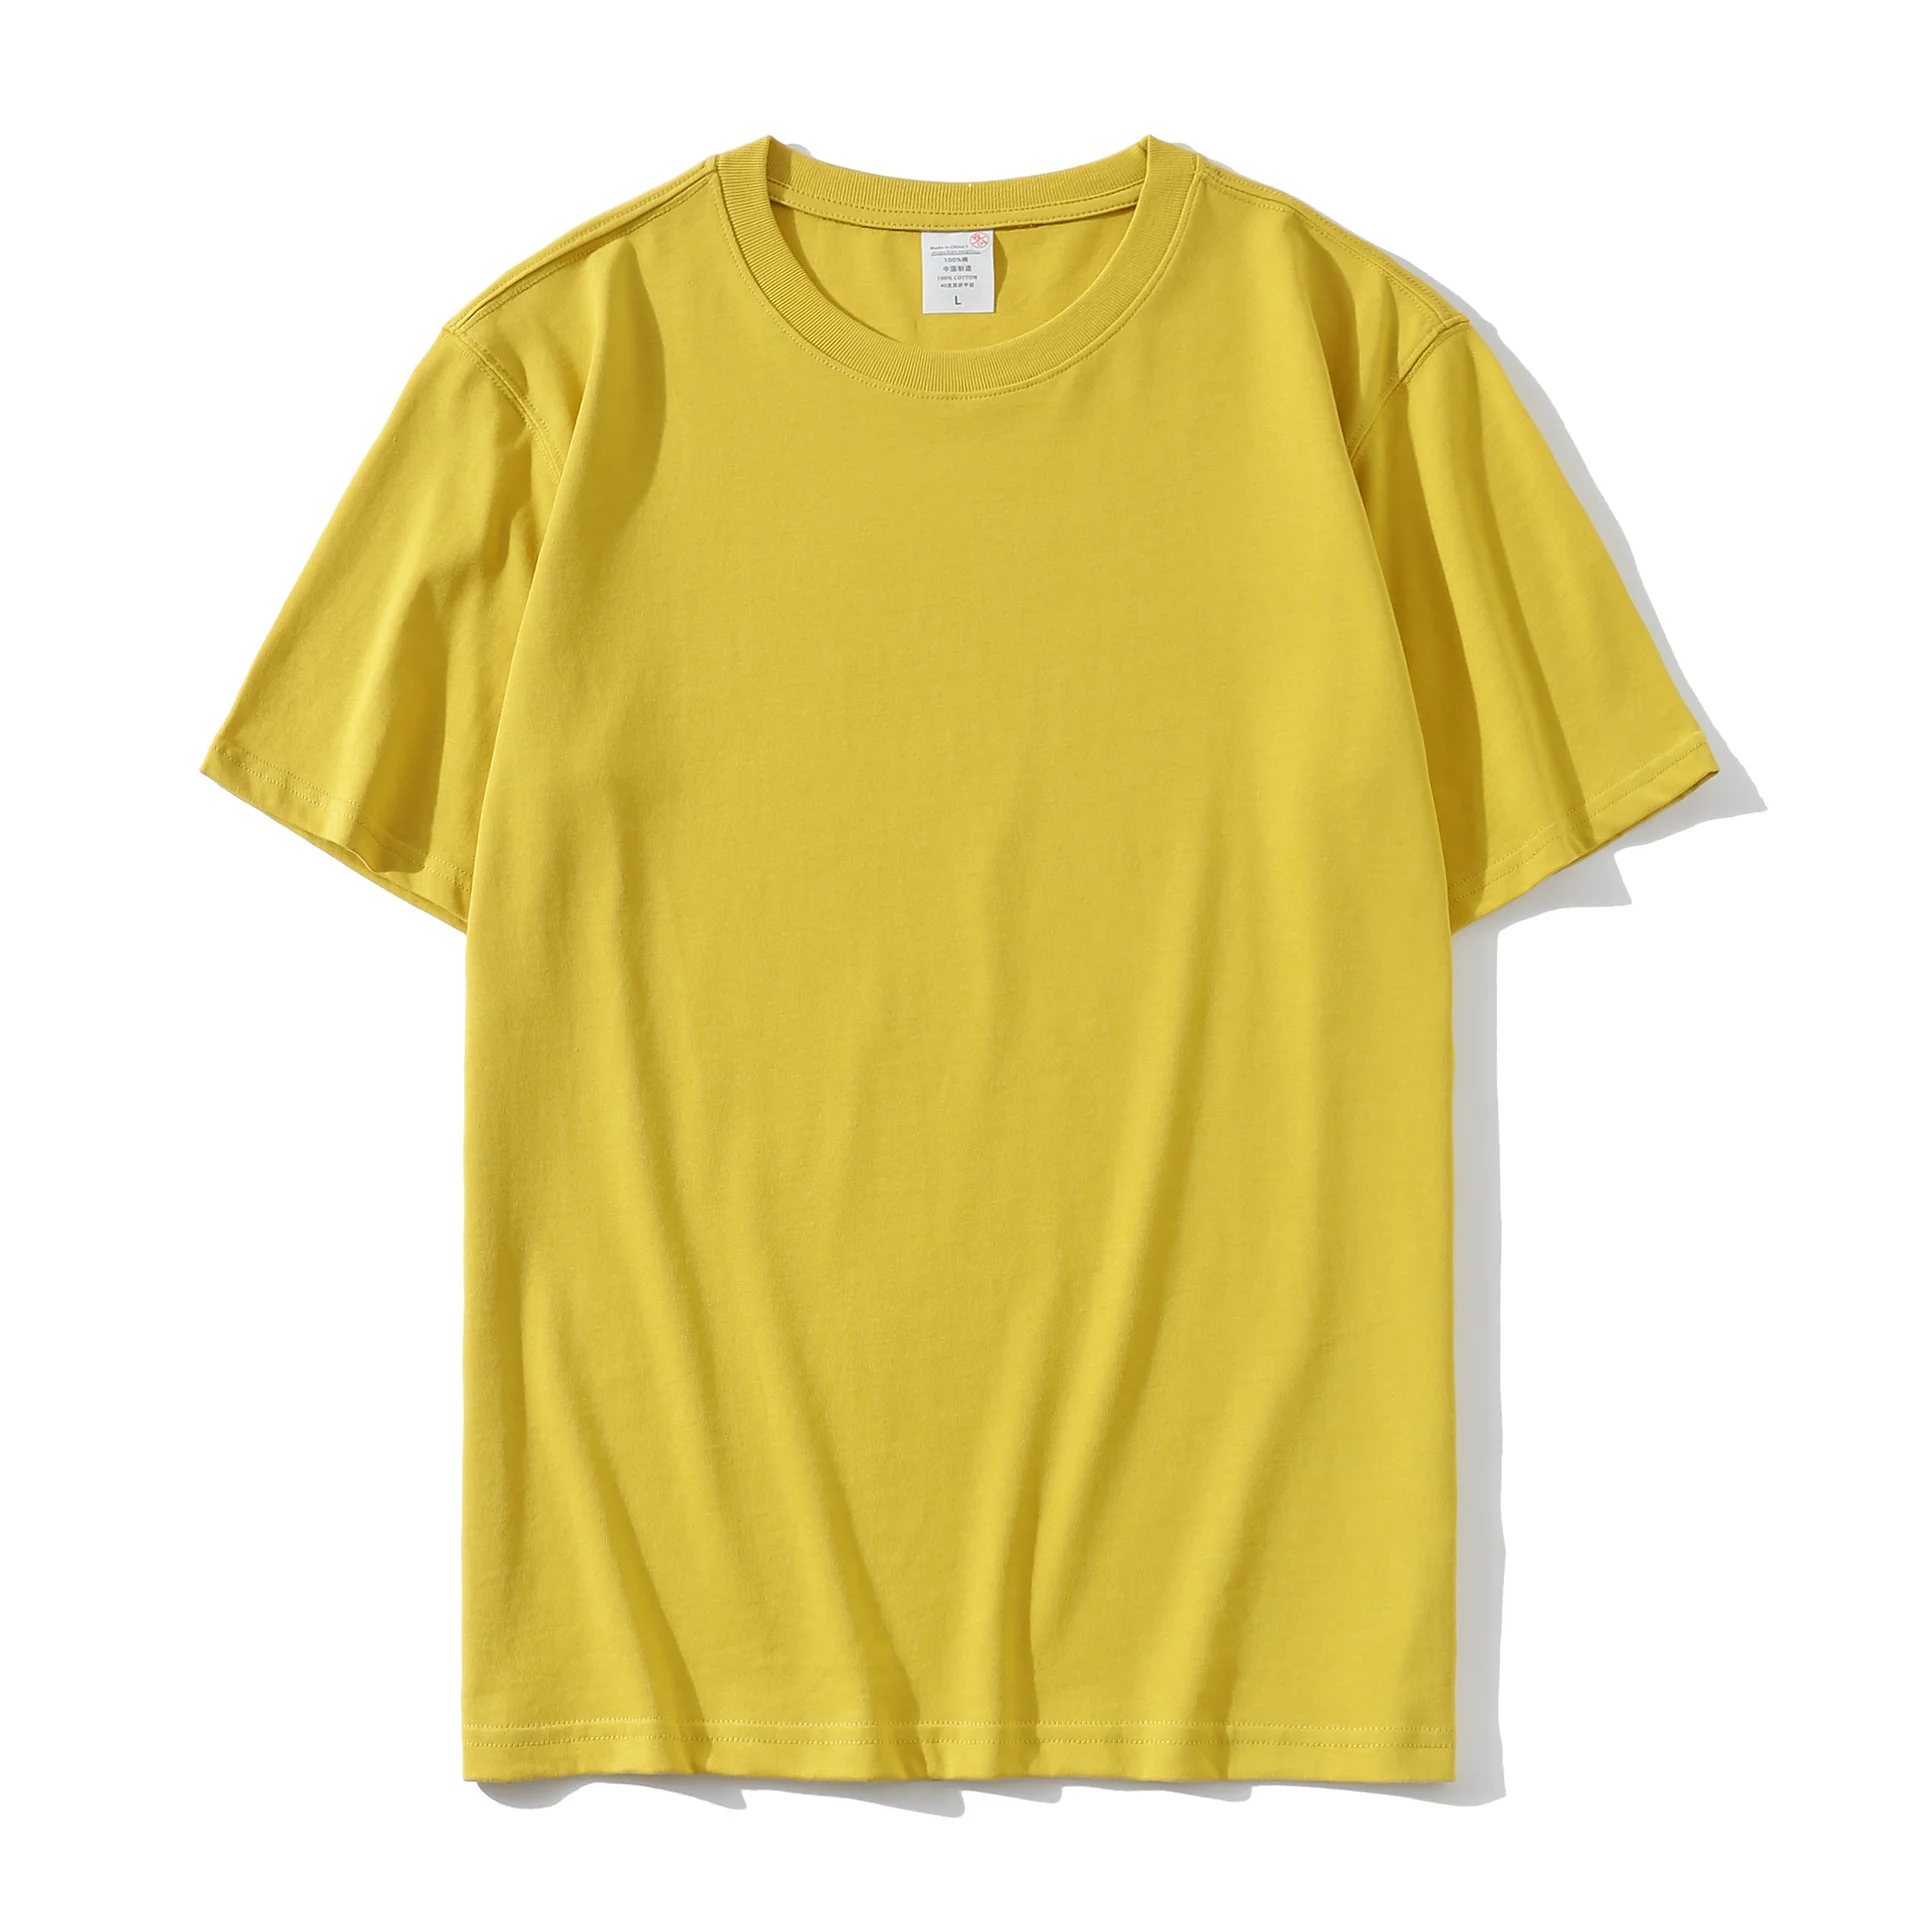 Wholesale Blank T shirts for Printing in Santa Rosa